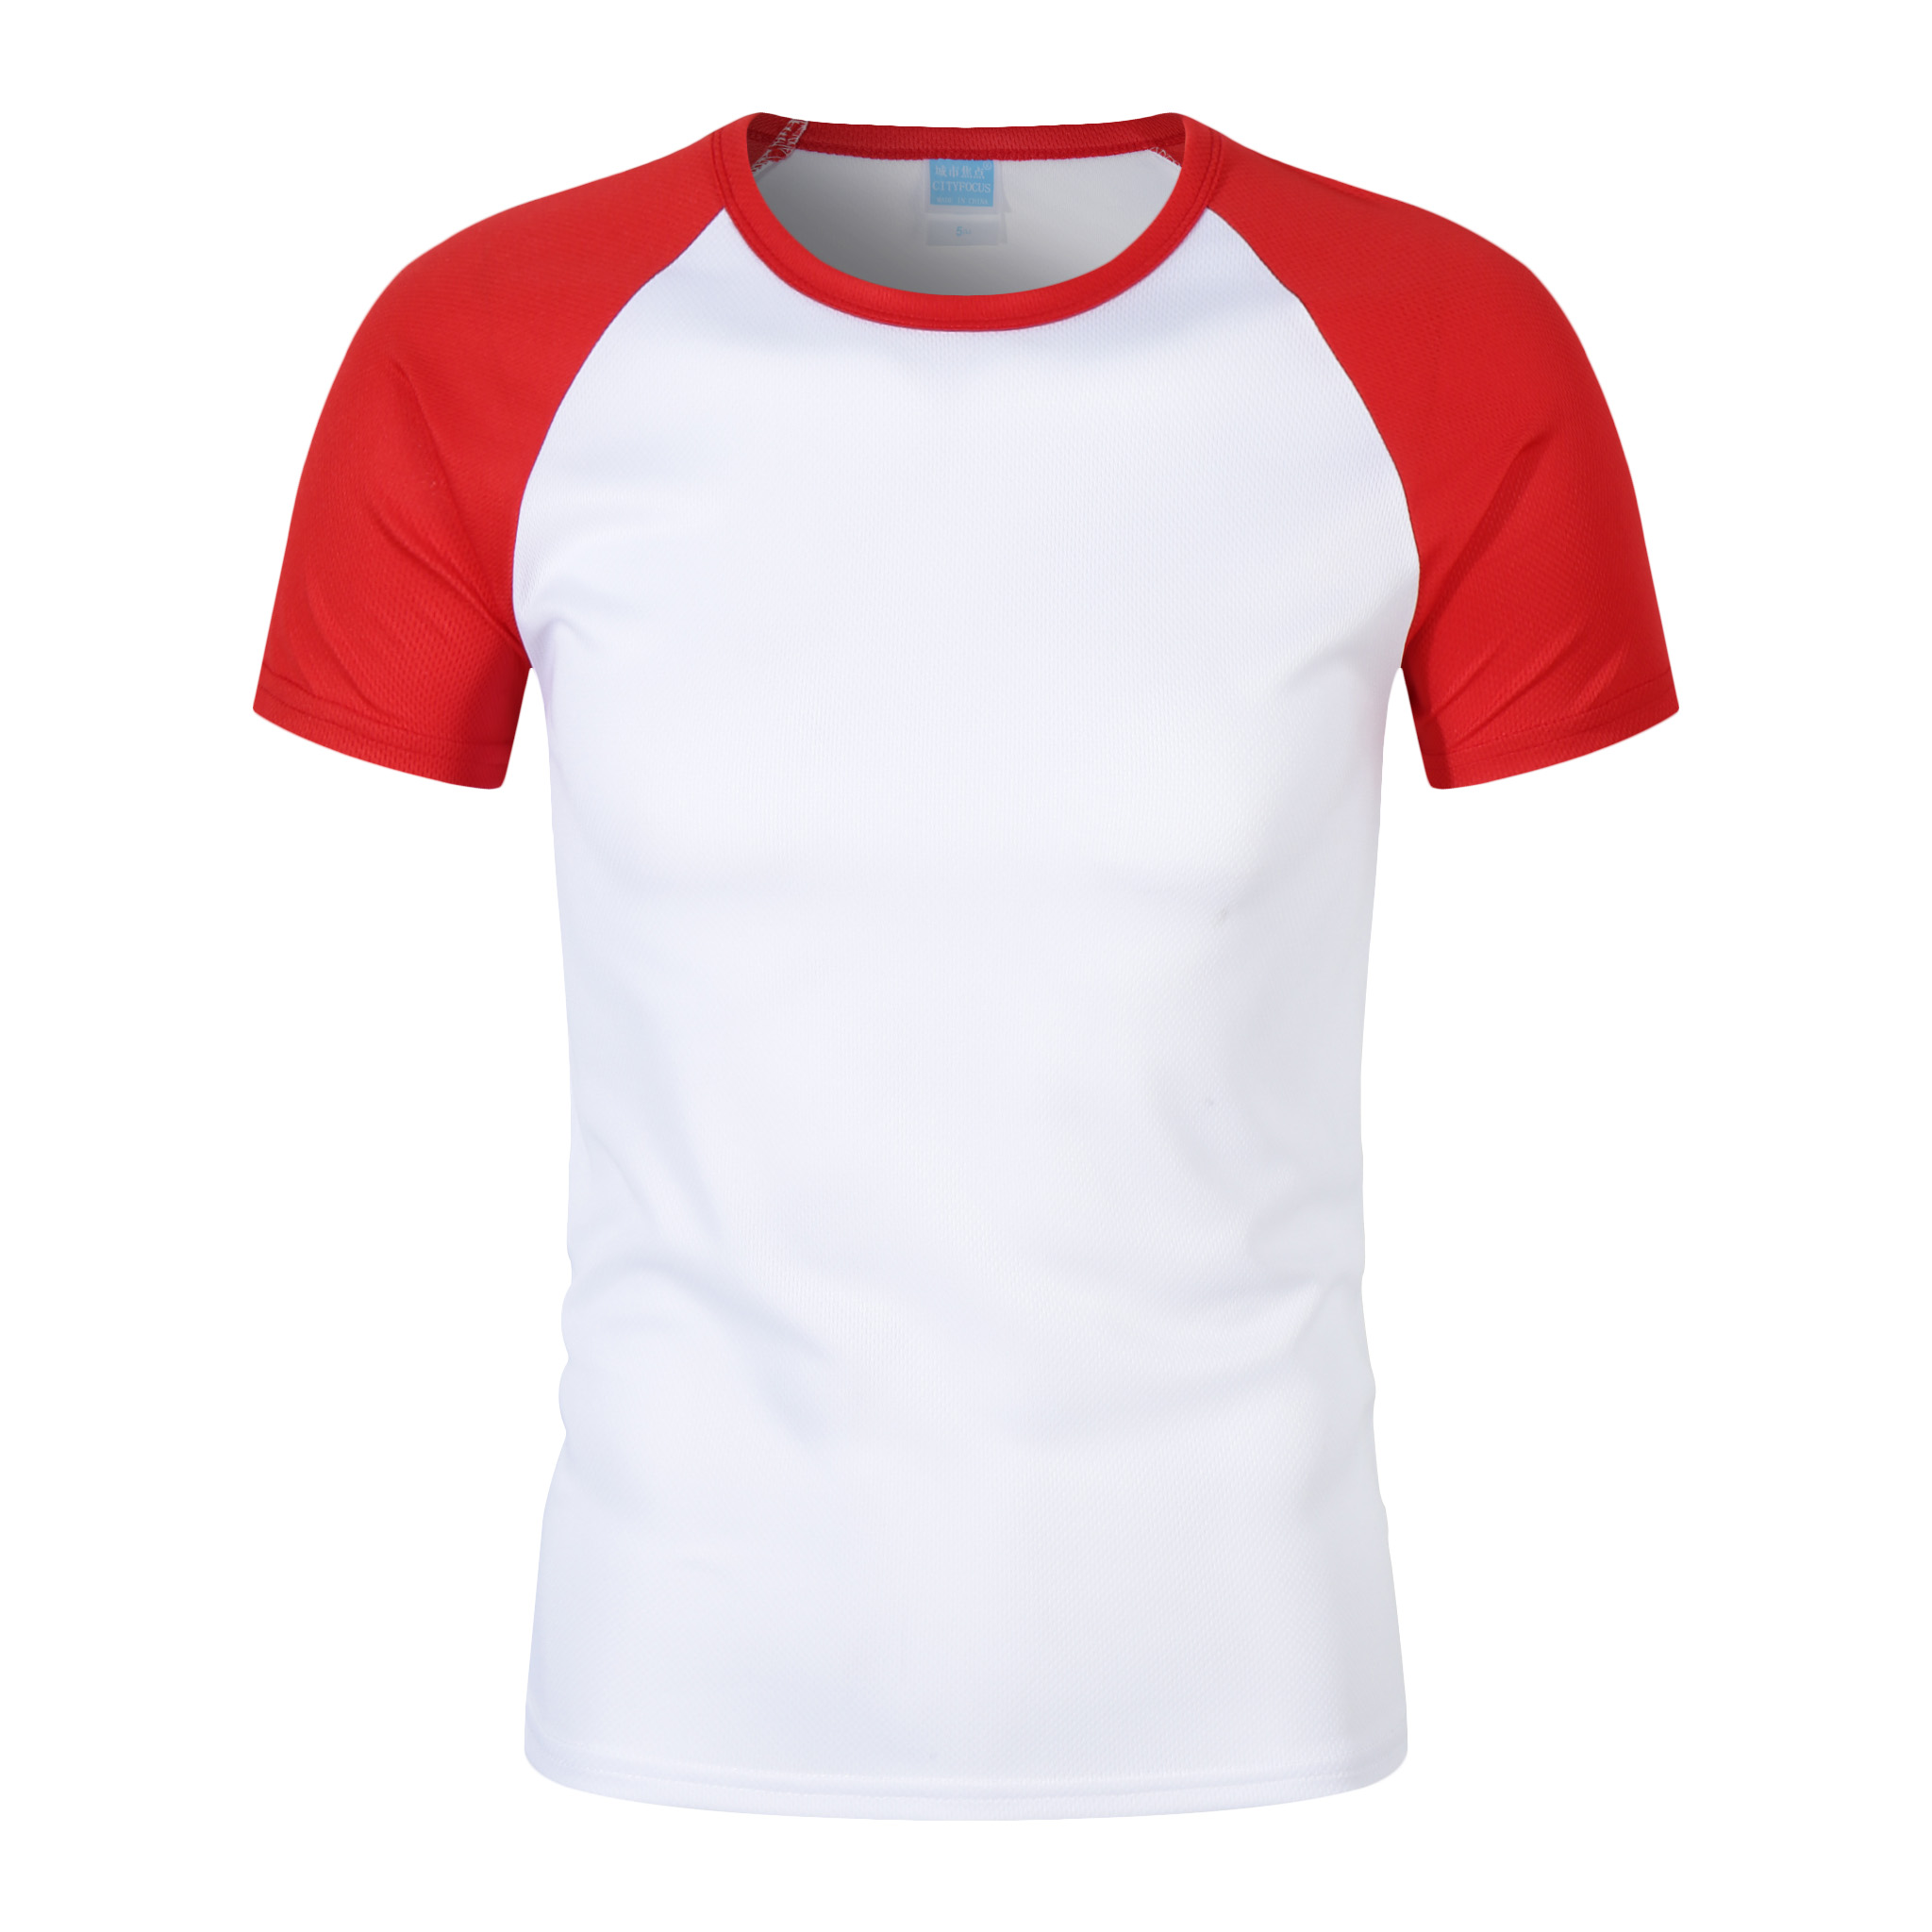 Reasonable price for Team Sweatshirts - High Quality Raglan sleeve round neck short t-shirt – Gift